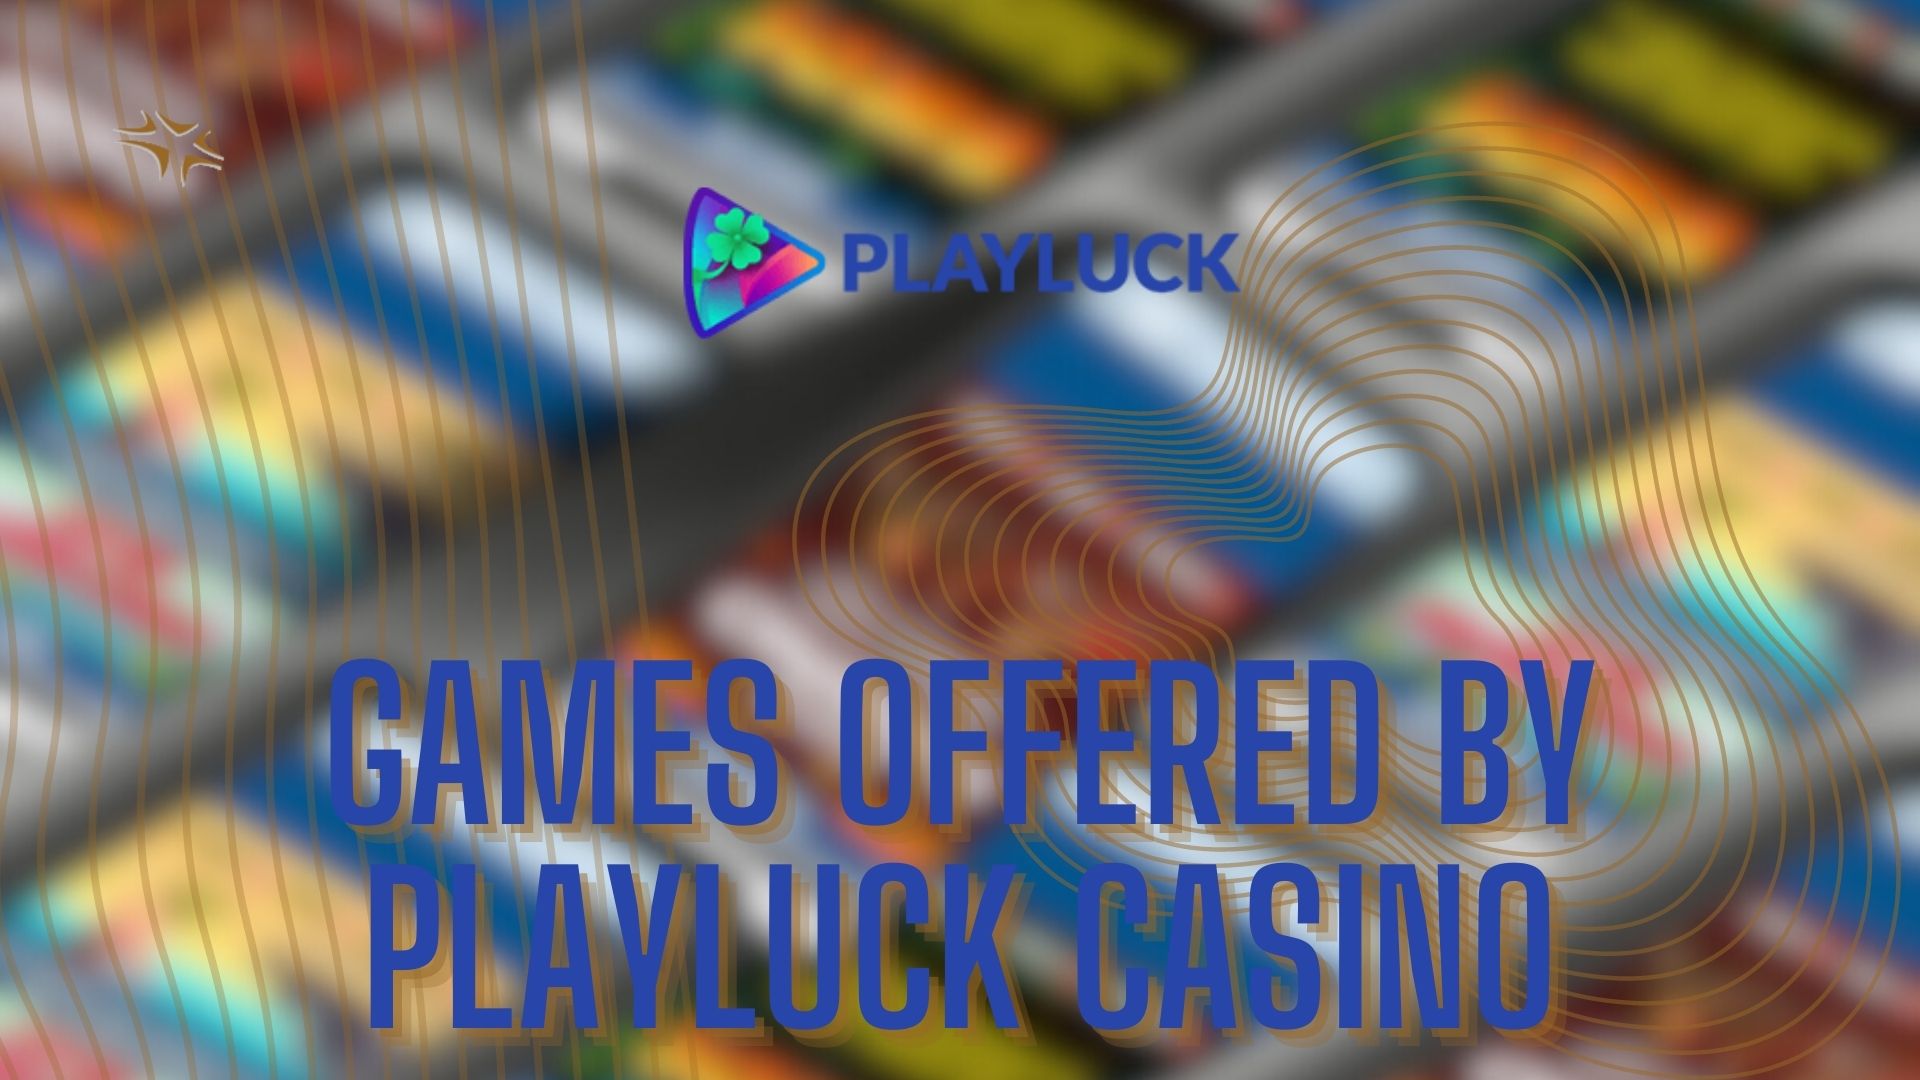 Playluck Casino offers